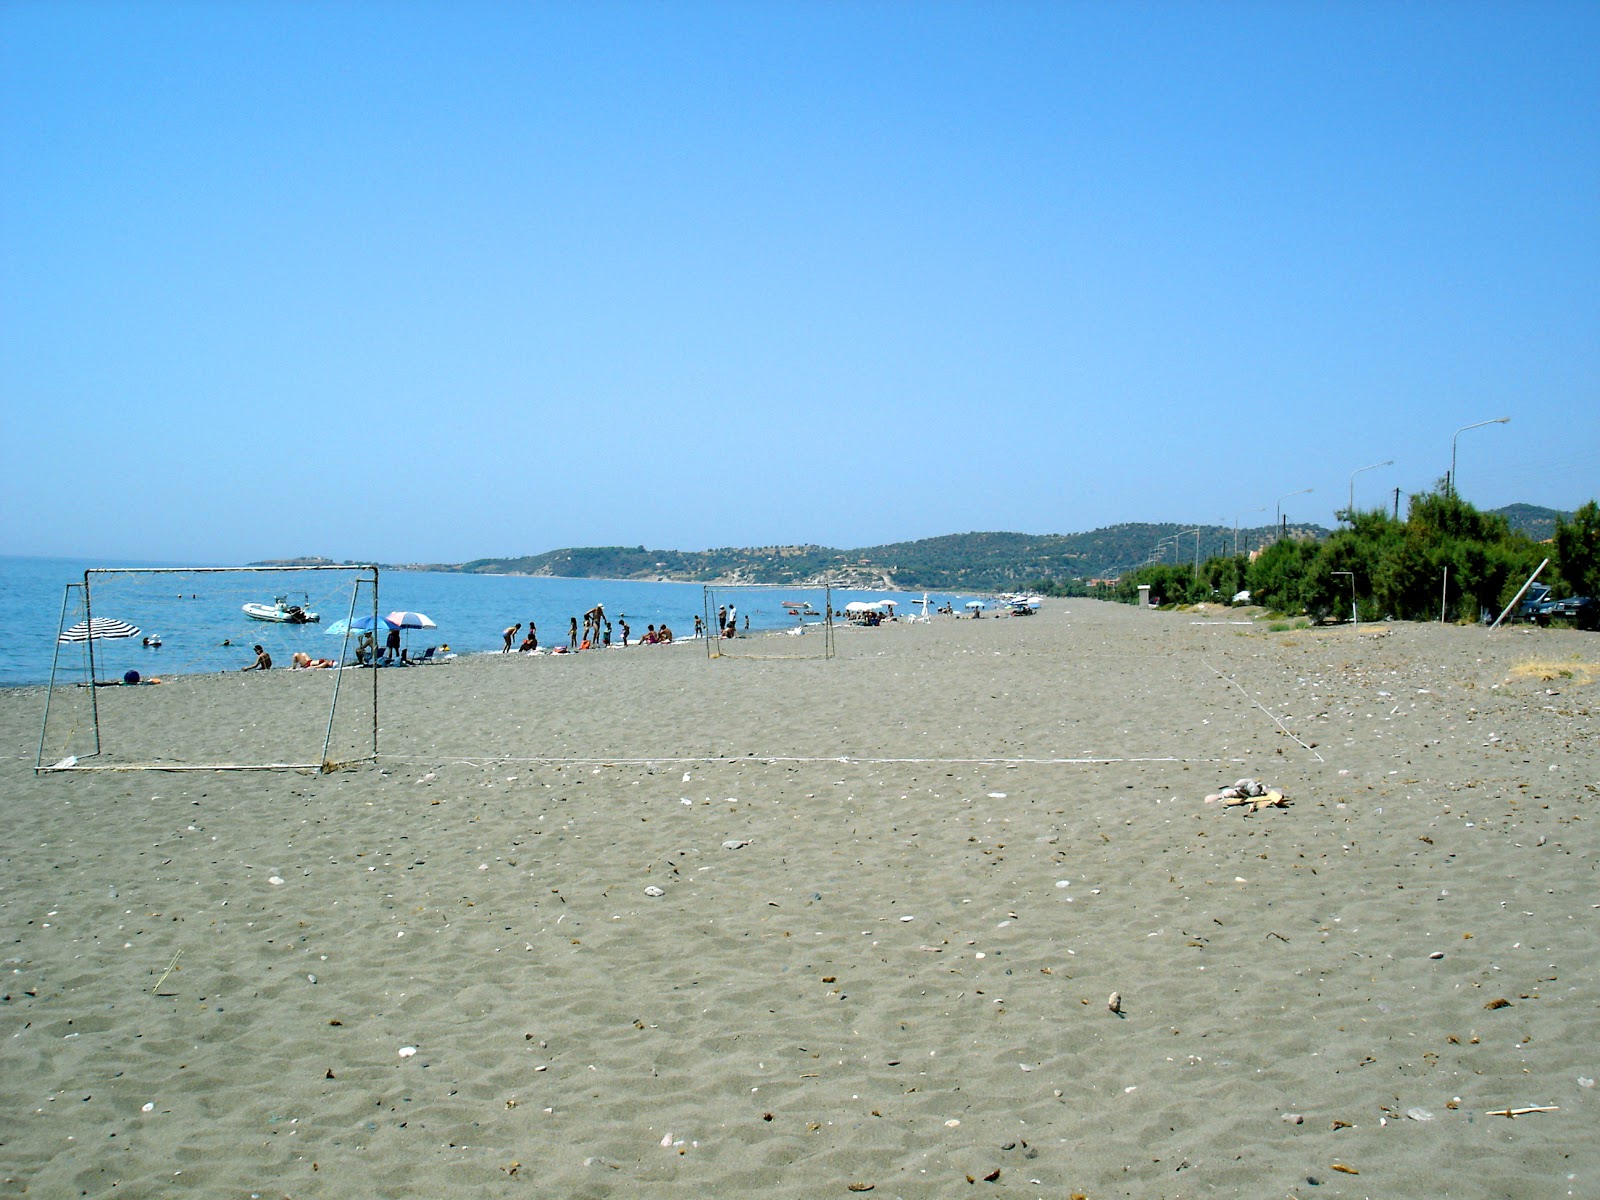 Foto de Vatera beach II - lugar popular entre os apreciadores de relaxamento